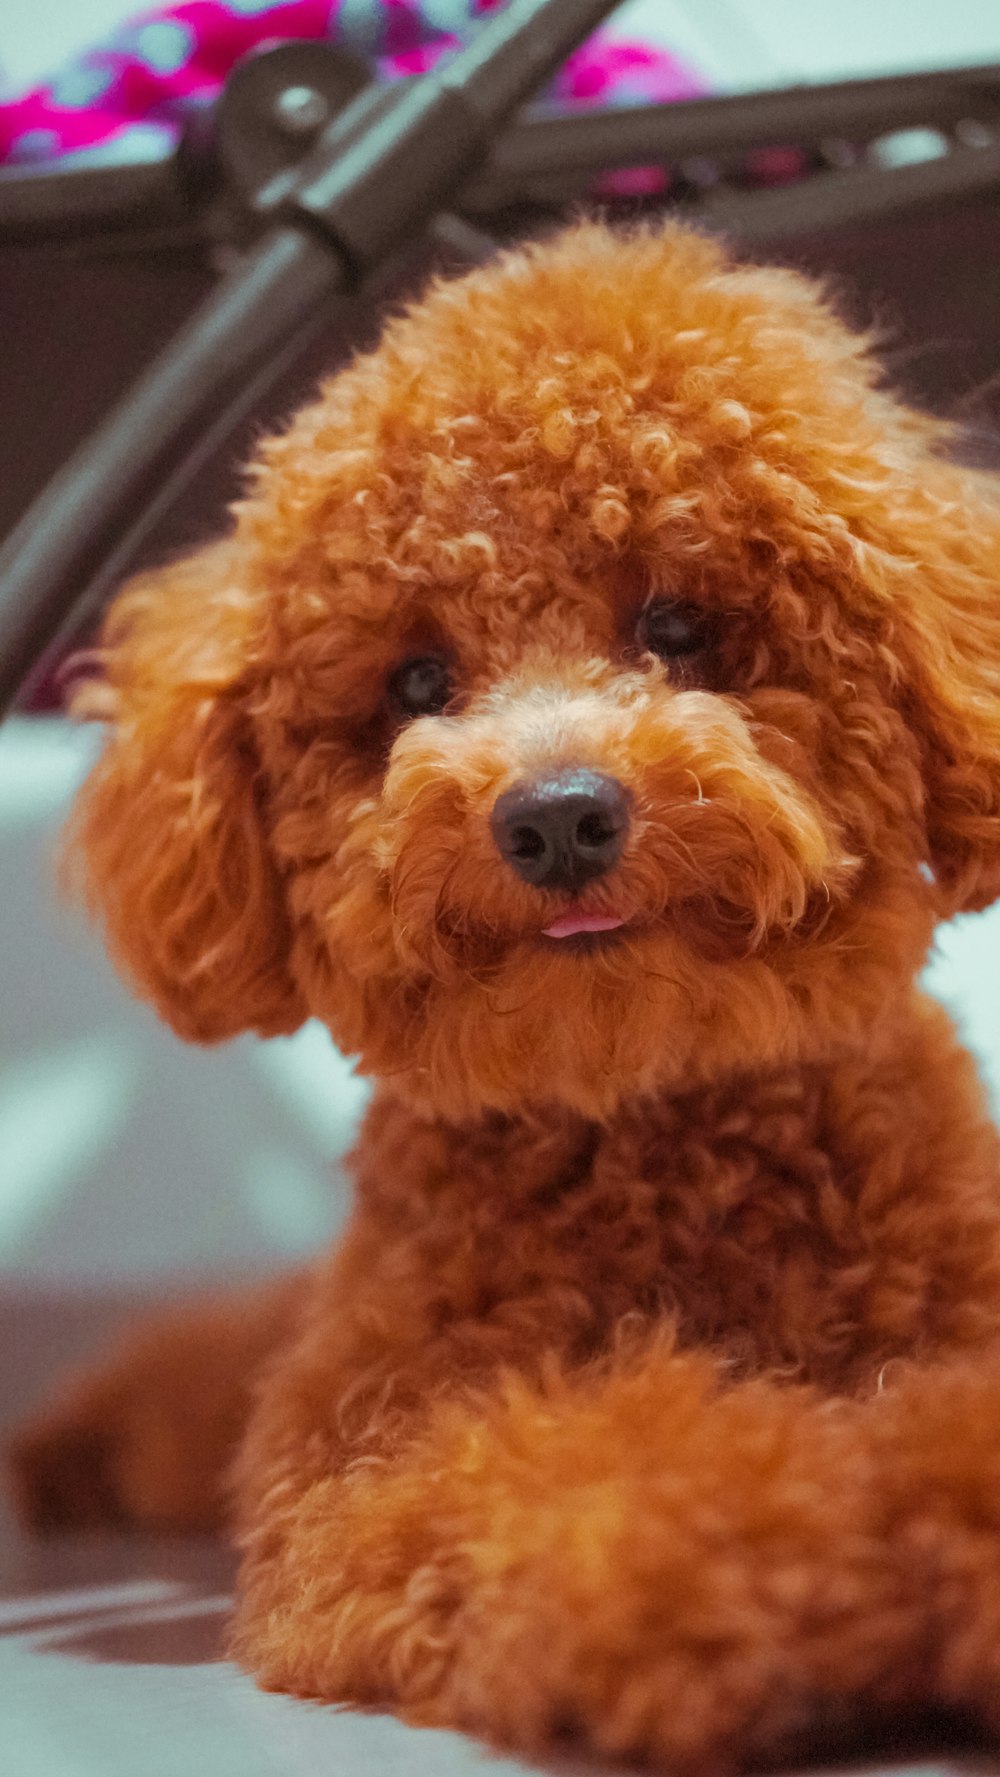 Brown long coated small dog photo – Free Poodle Image on Unsplash